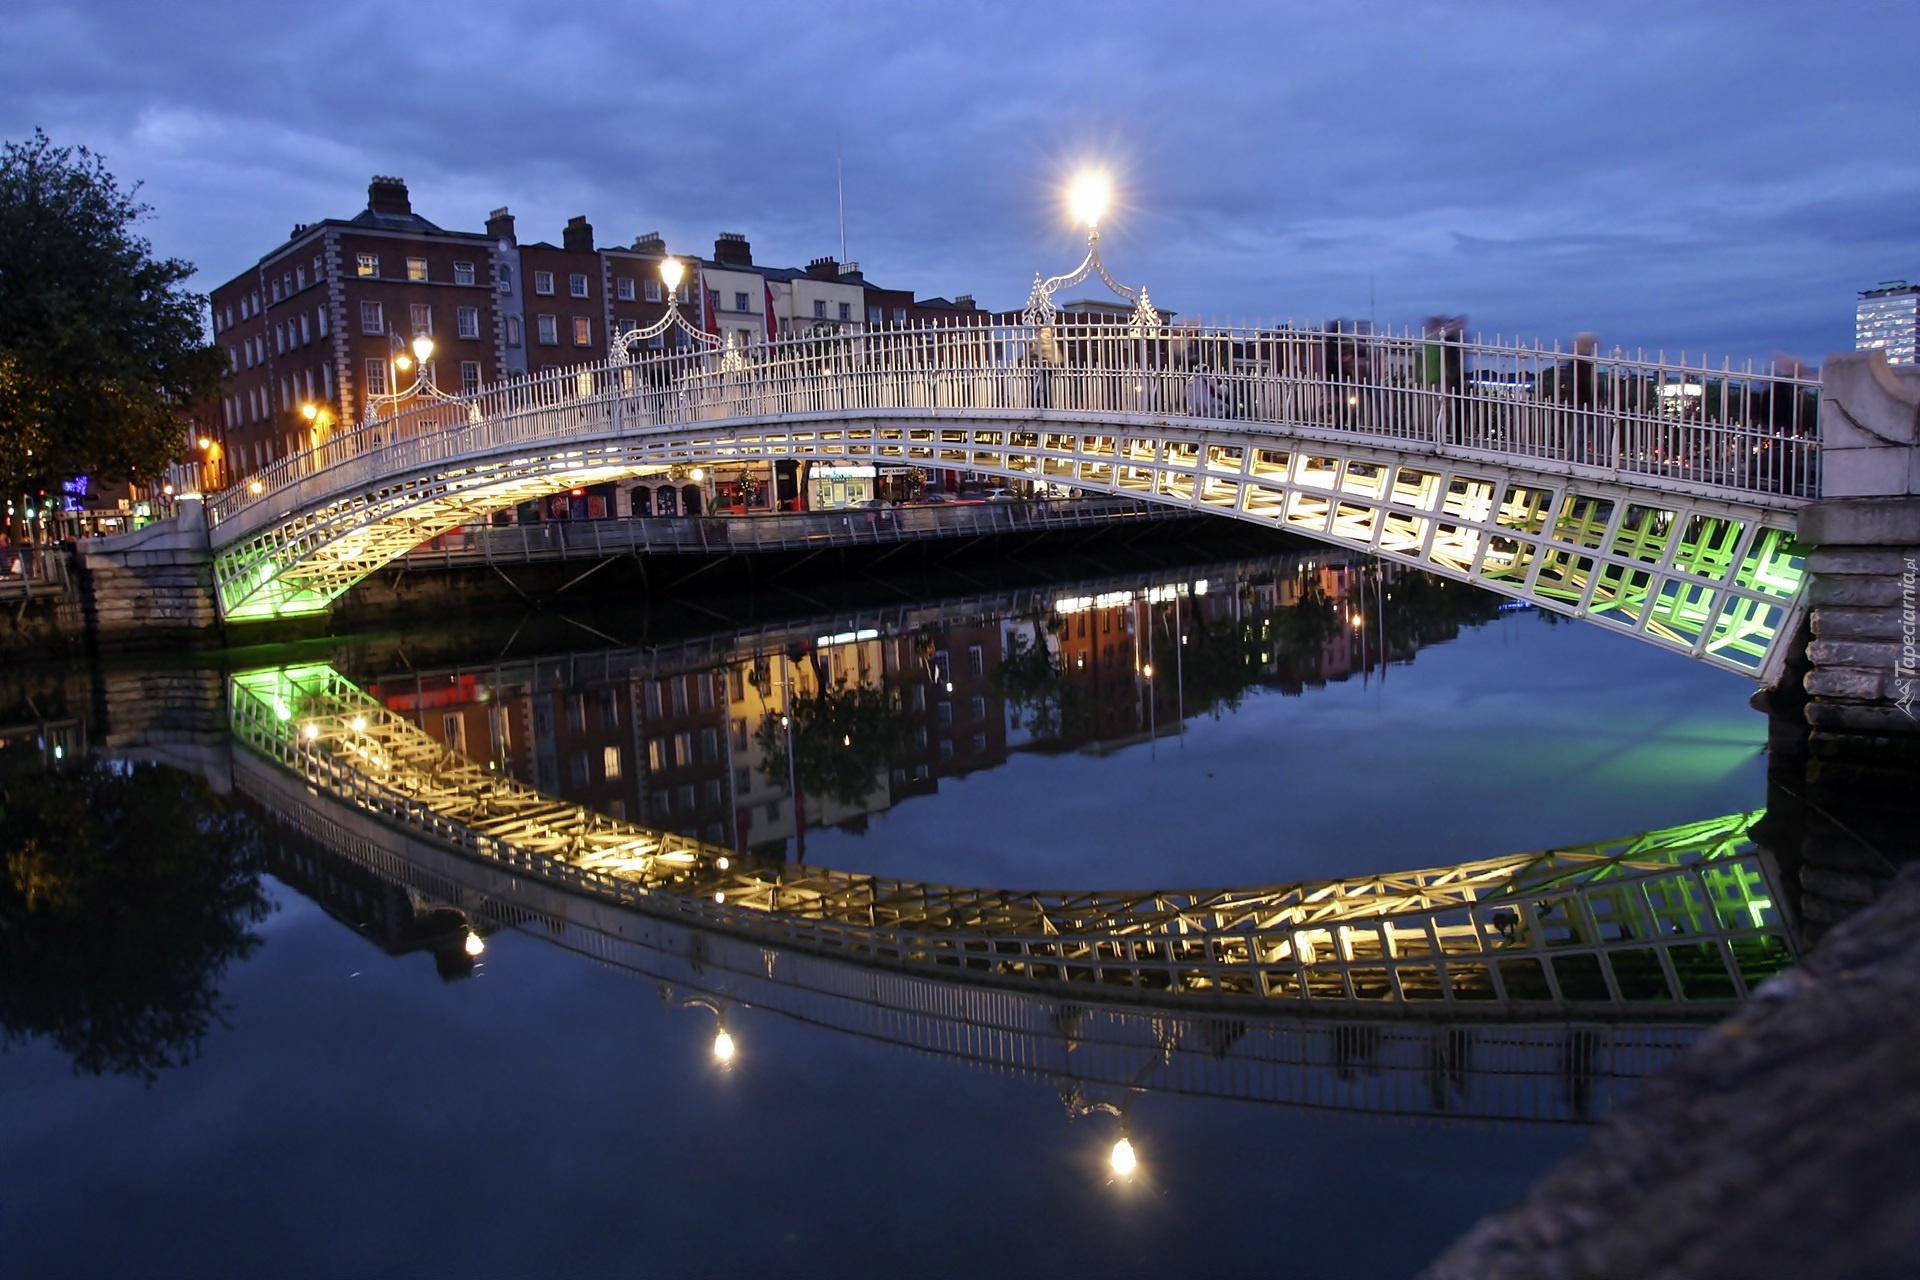 Dublin, Domy, Rzeka, Liffey, Most, Noc